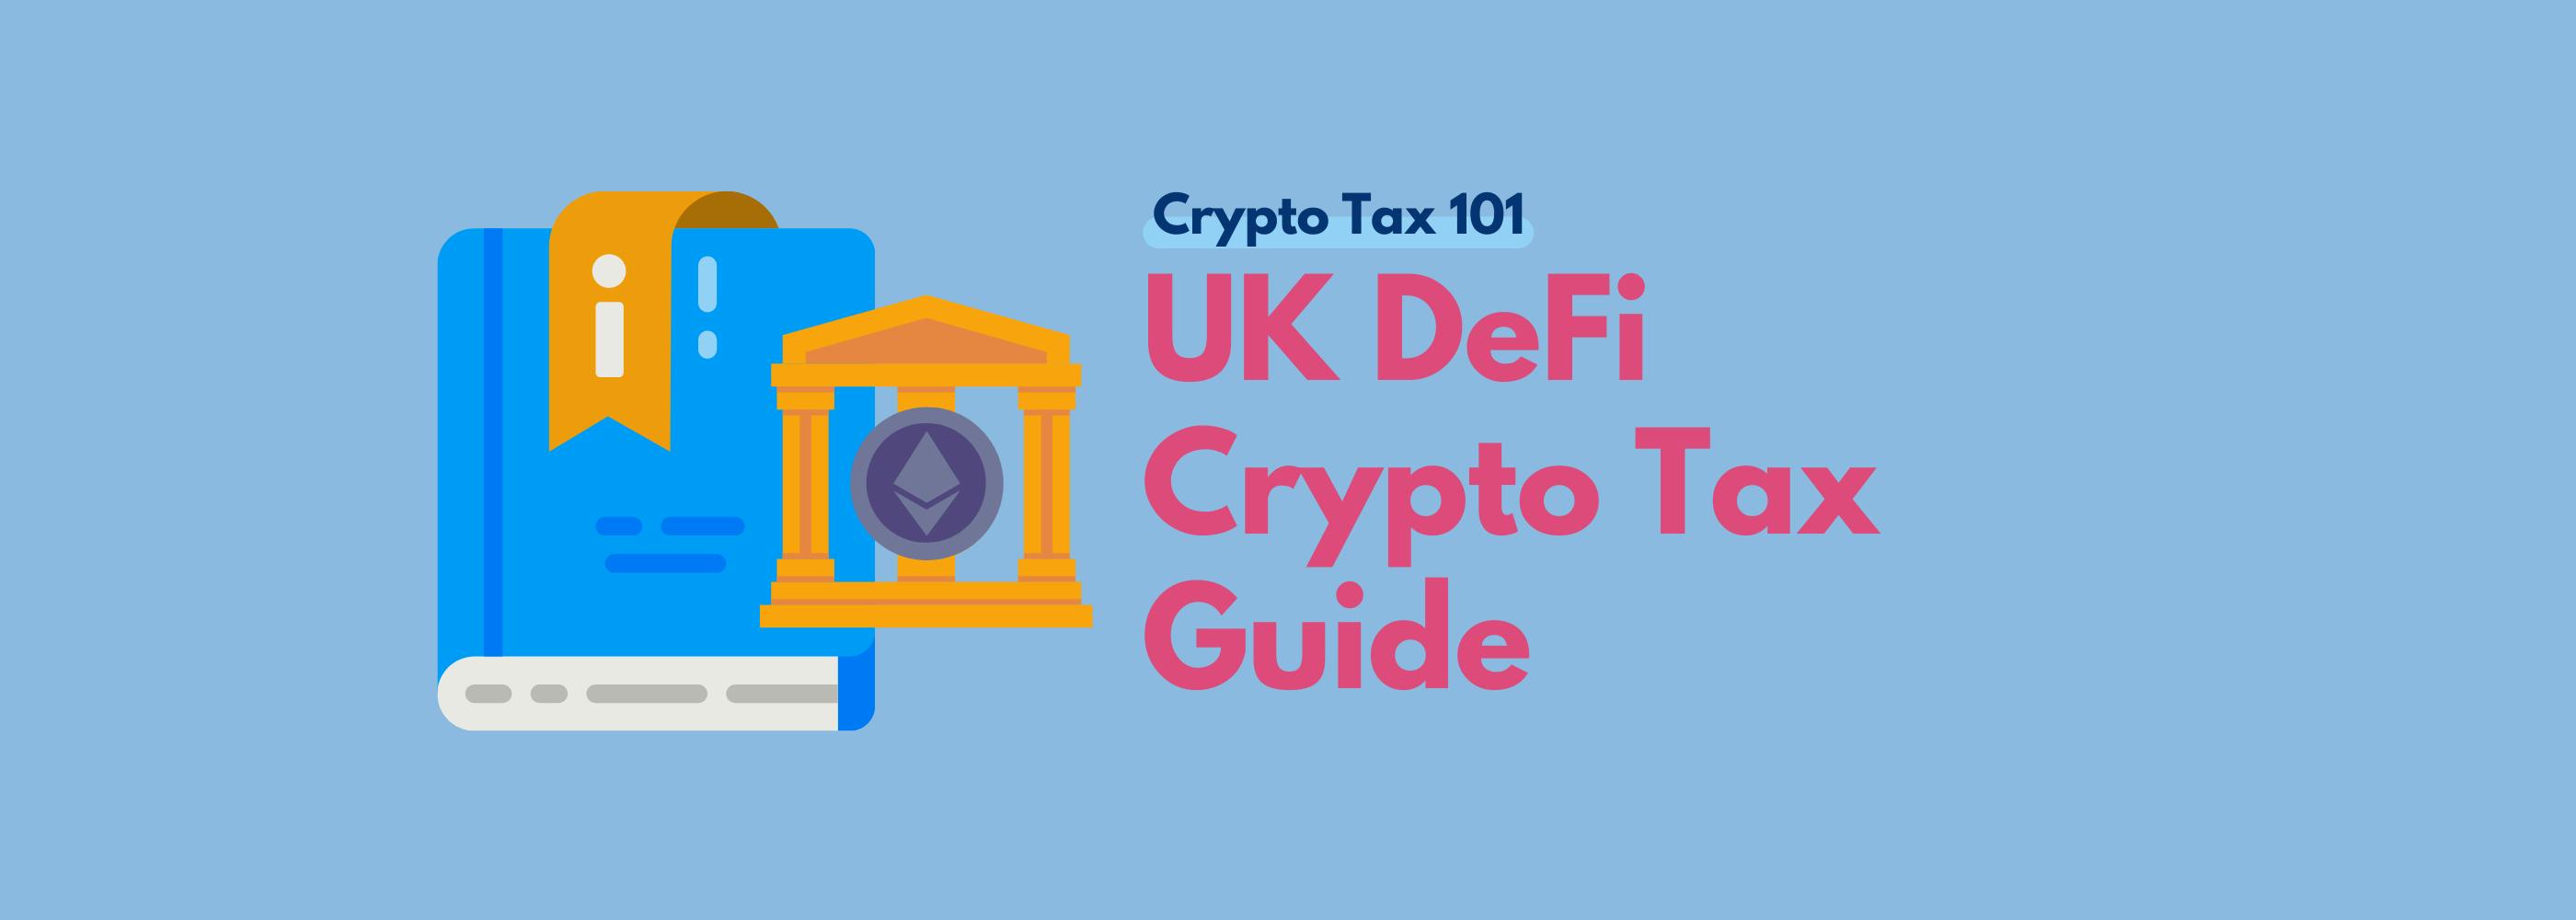 Koinly crypto tax calculator - UK DeFi tax